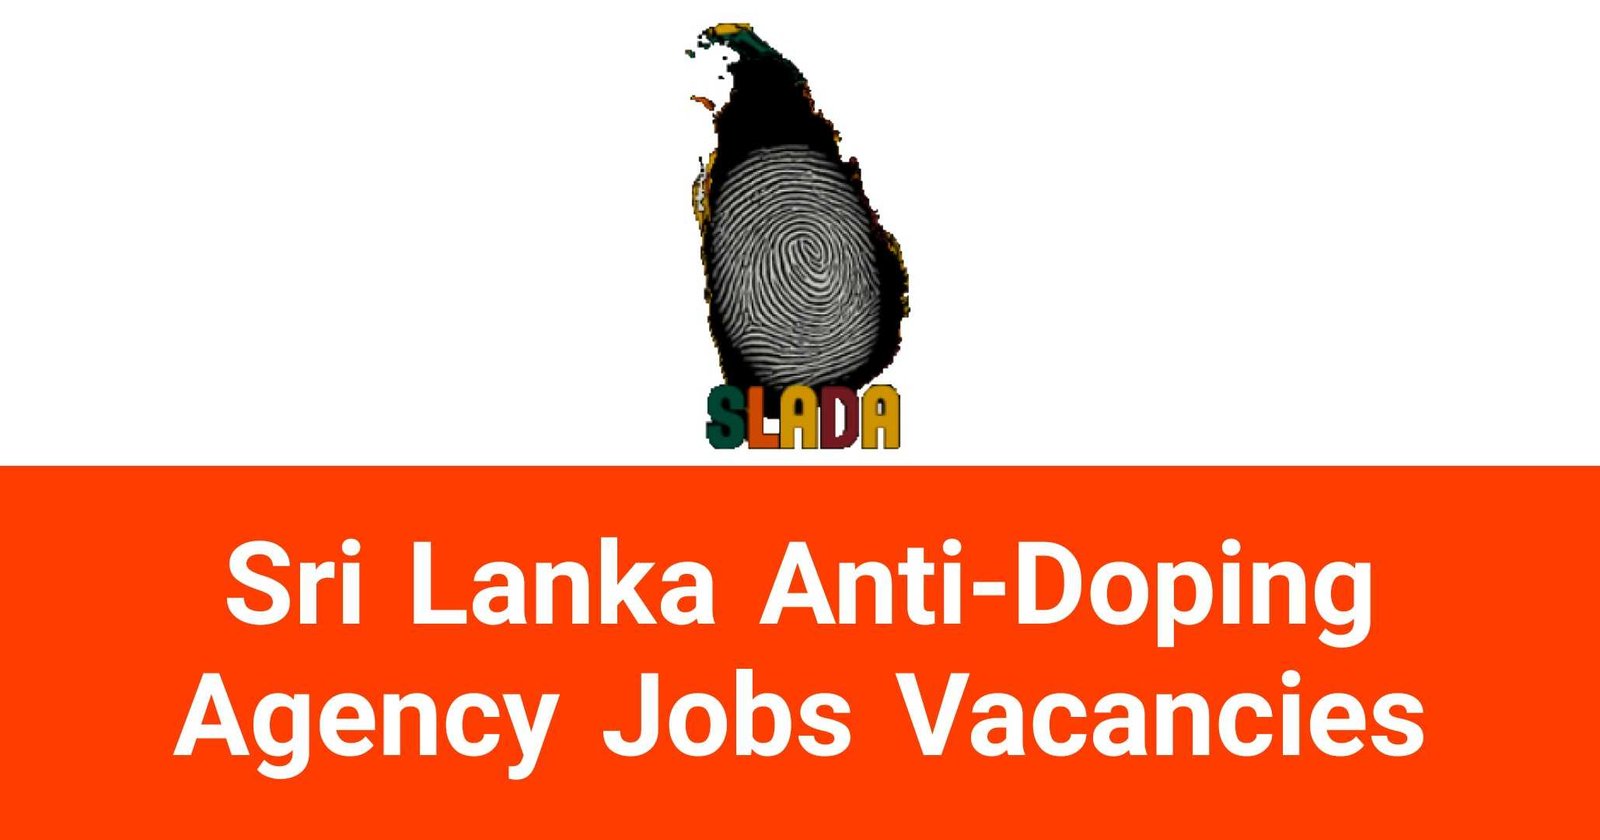 Sri Lanka Anti-Doping Agency Jobs Vacancies Careers